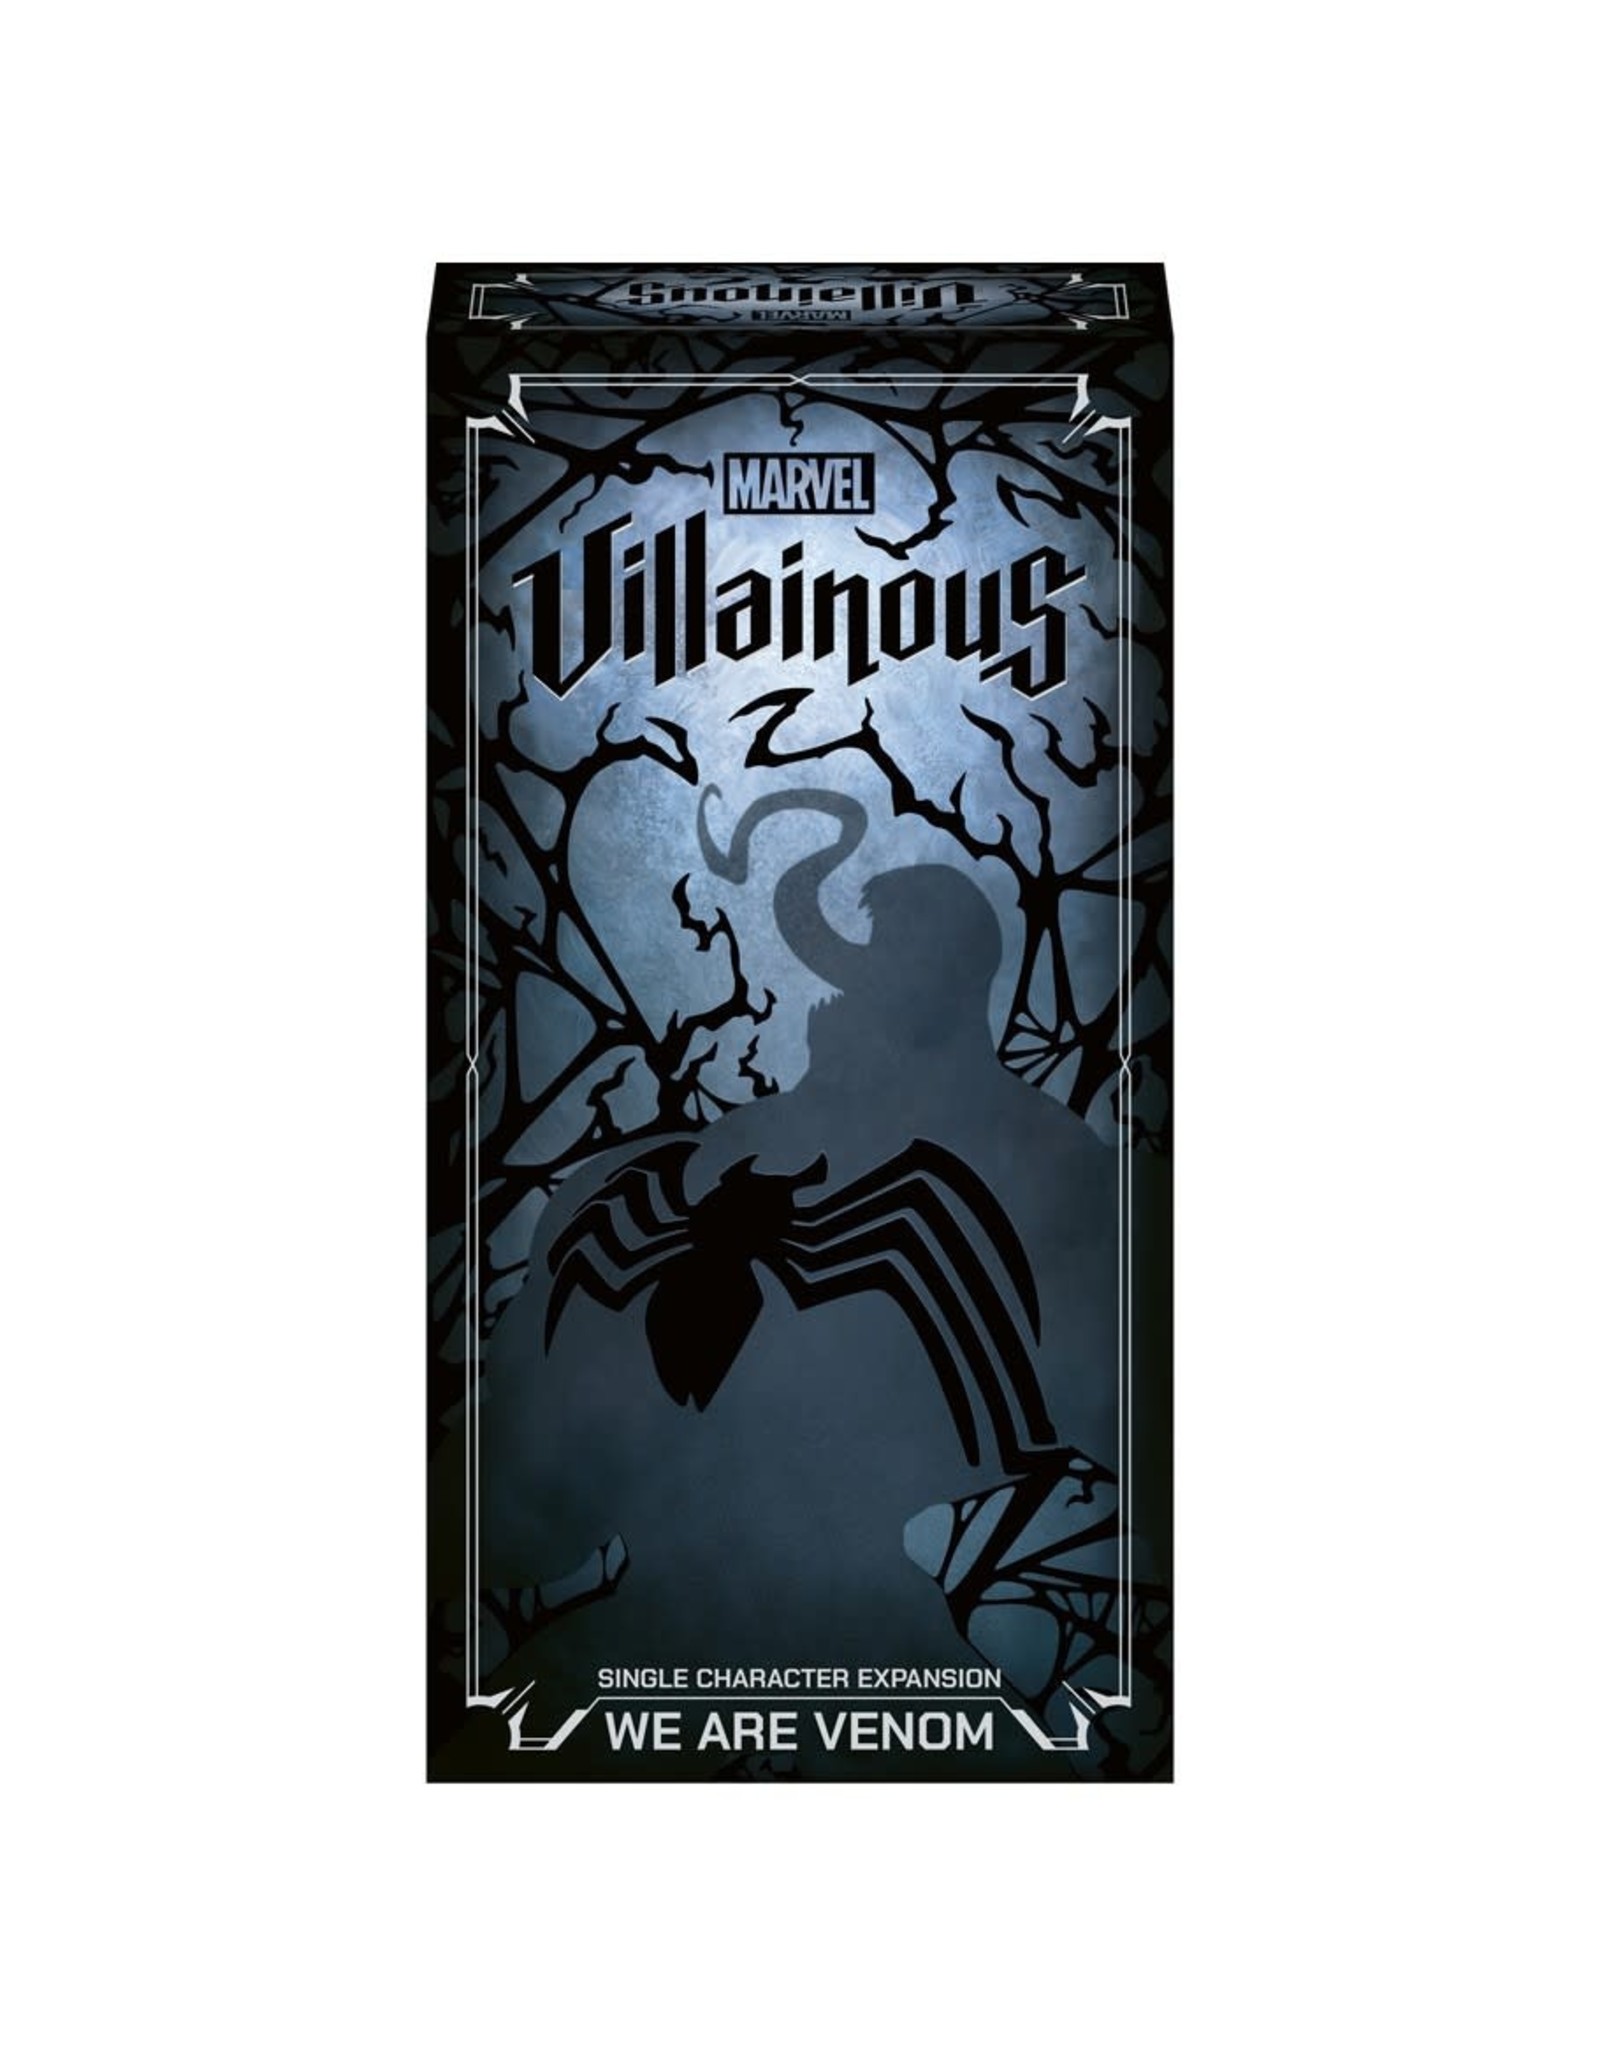 Ravensburger Marvel Villainous: We Are Venom